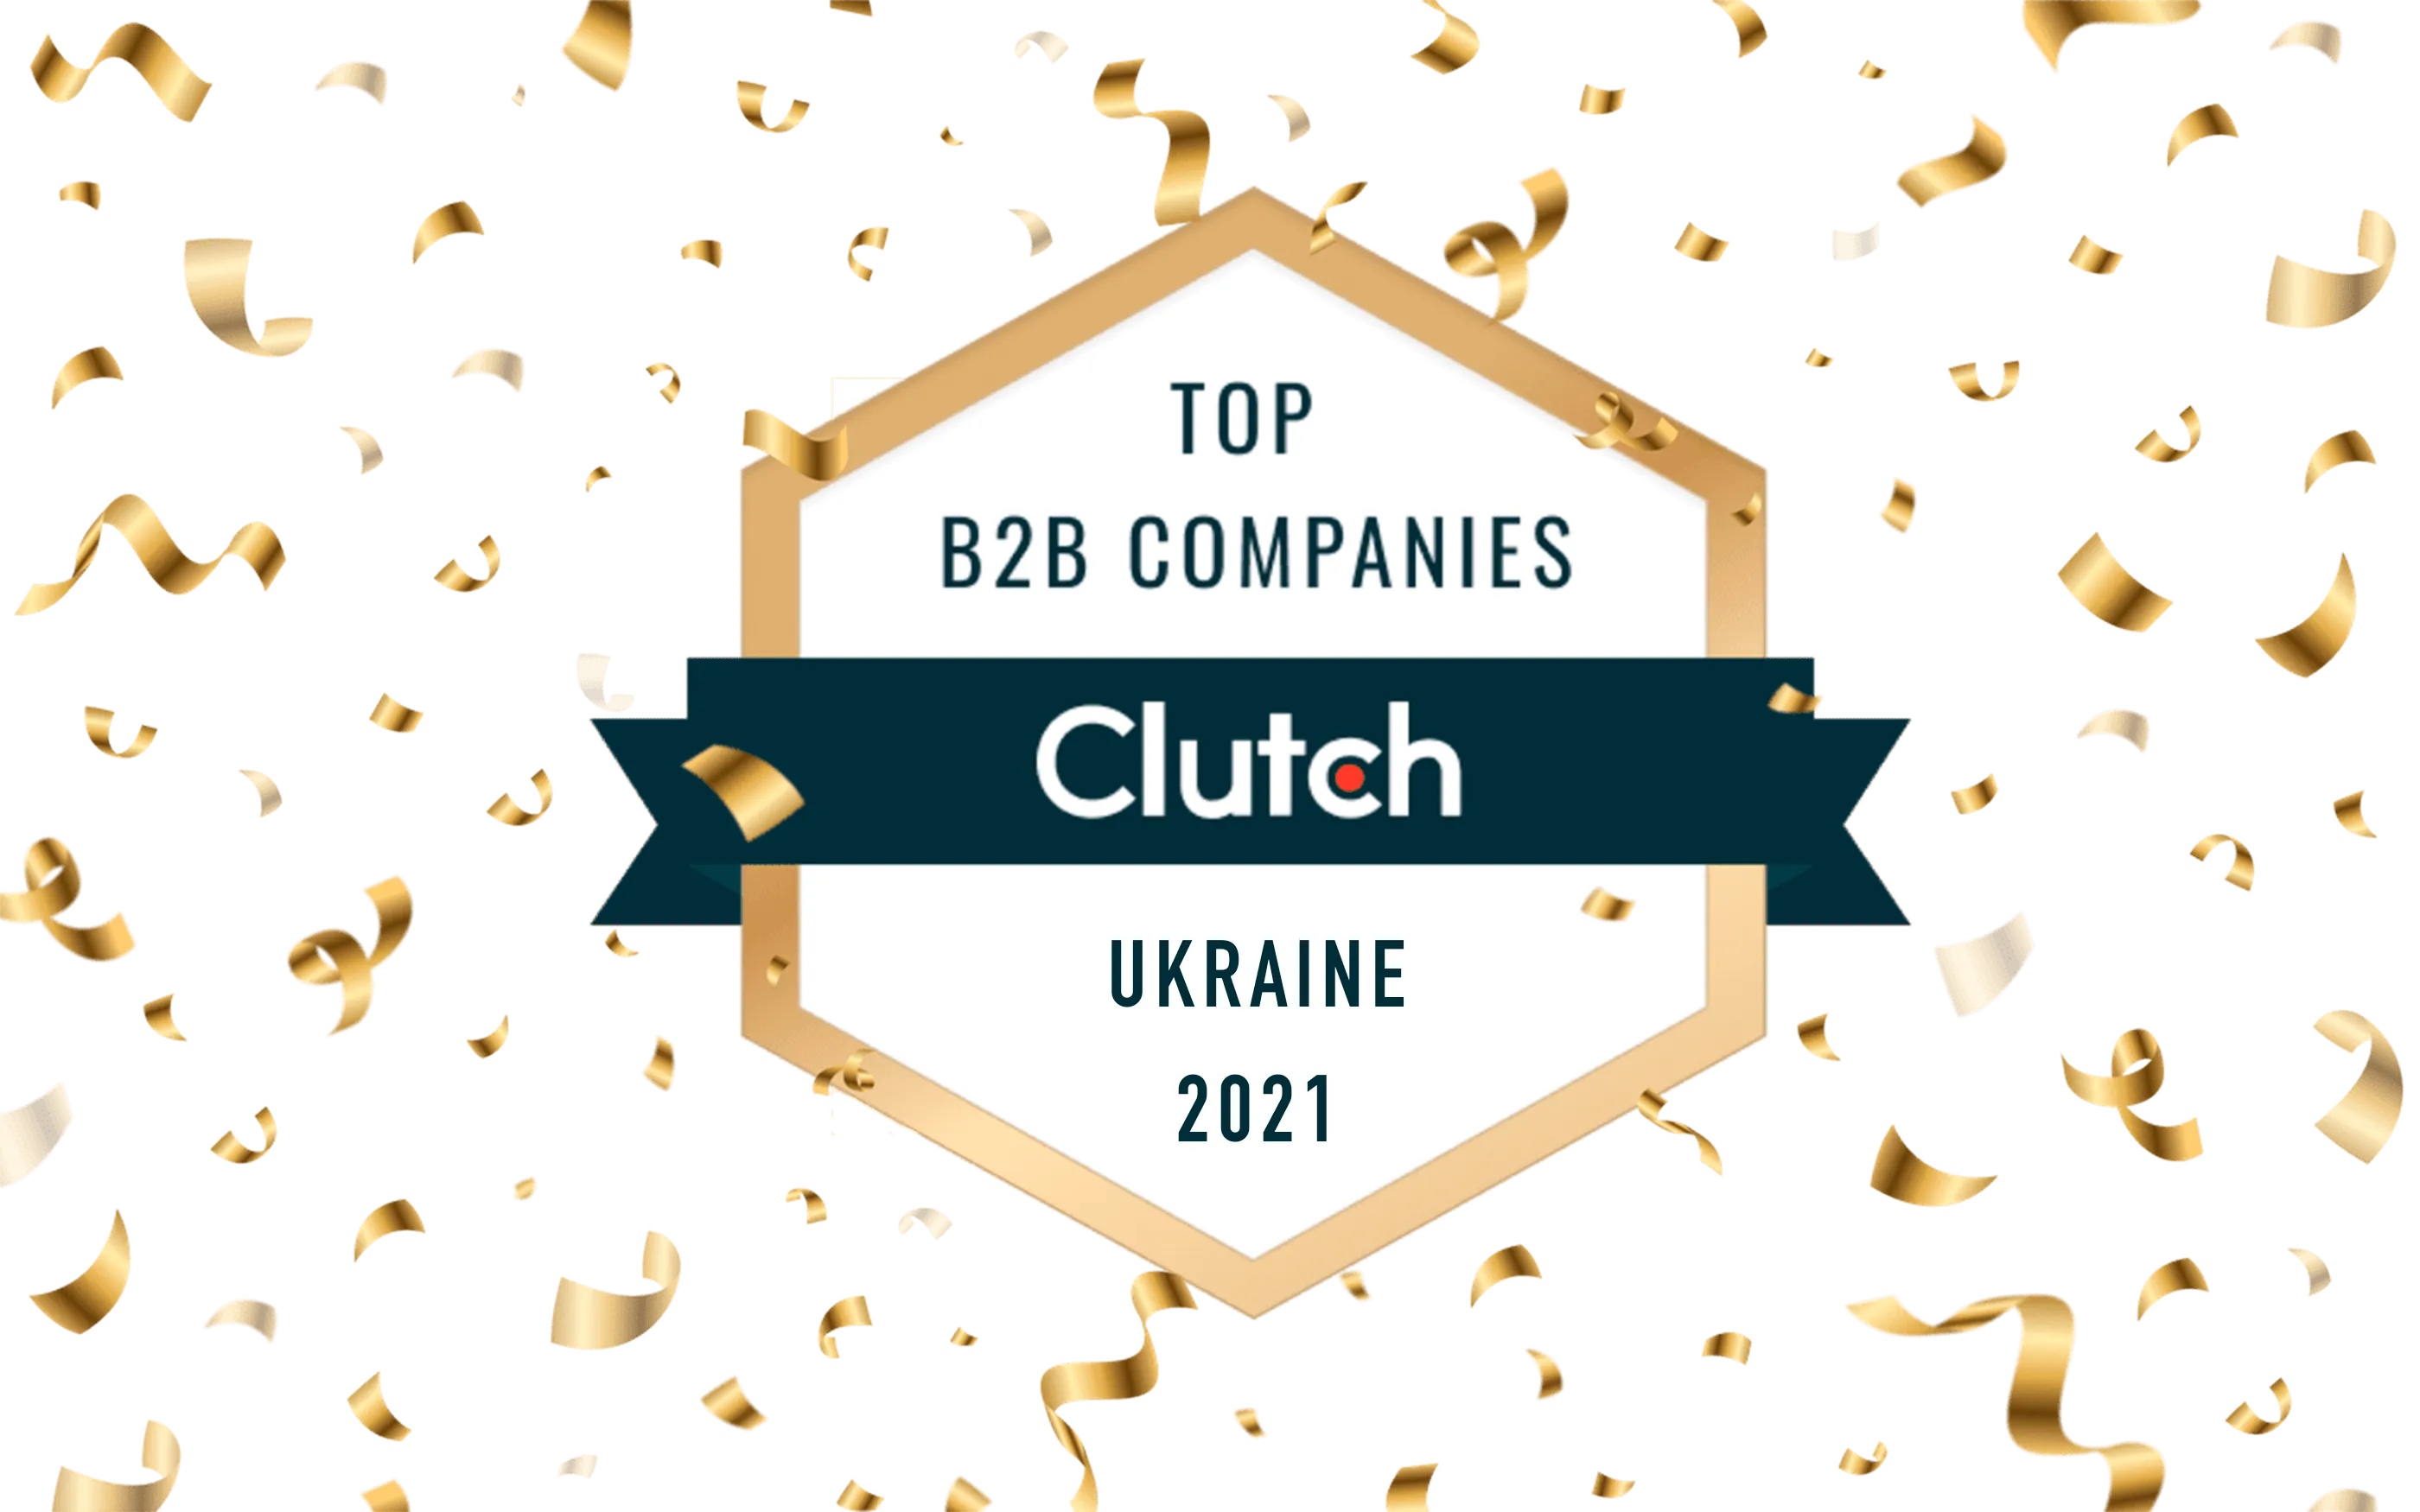 Top B2B companies in Ukraine for 2021